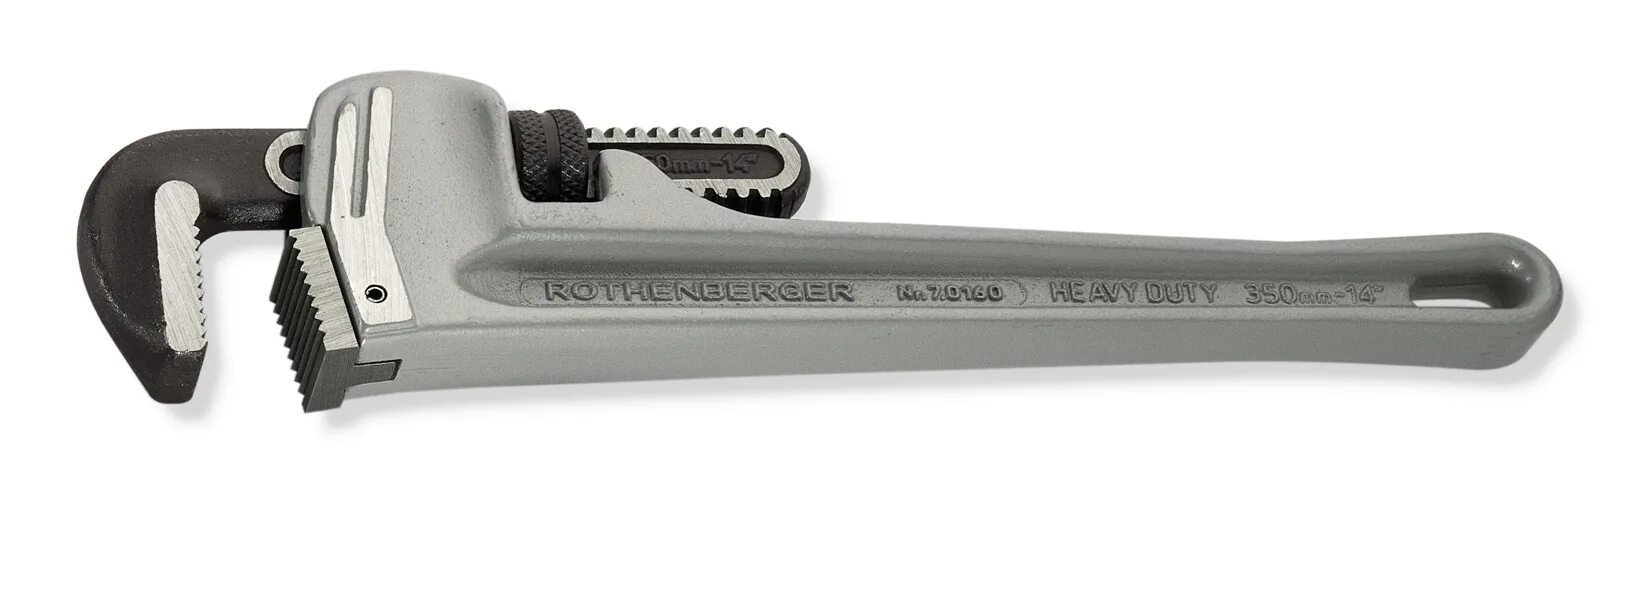 Ключ тд. Ключ газовый Rothenberger 70123х. Ключ разводной Ротенбергер динамометрический. Галка ключ трубный. Разводной ключ Unipro.